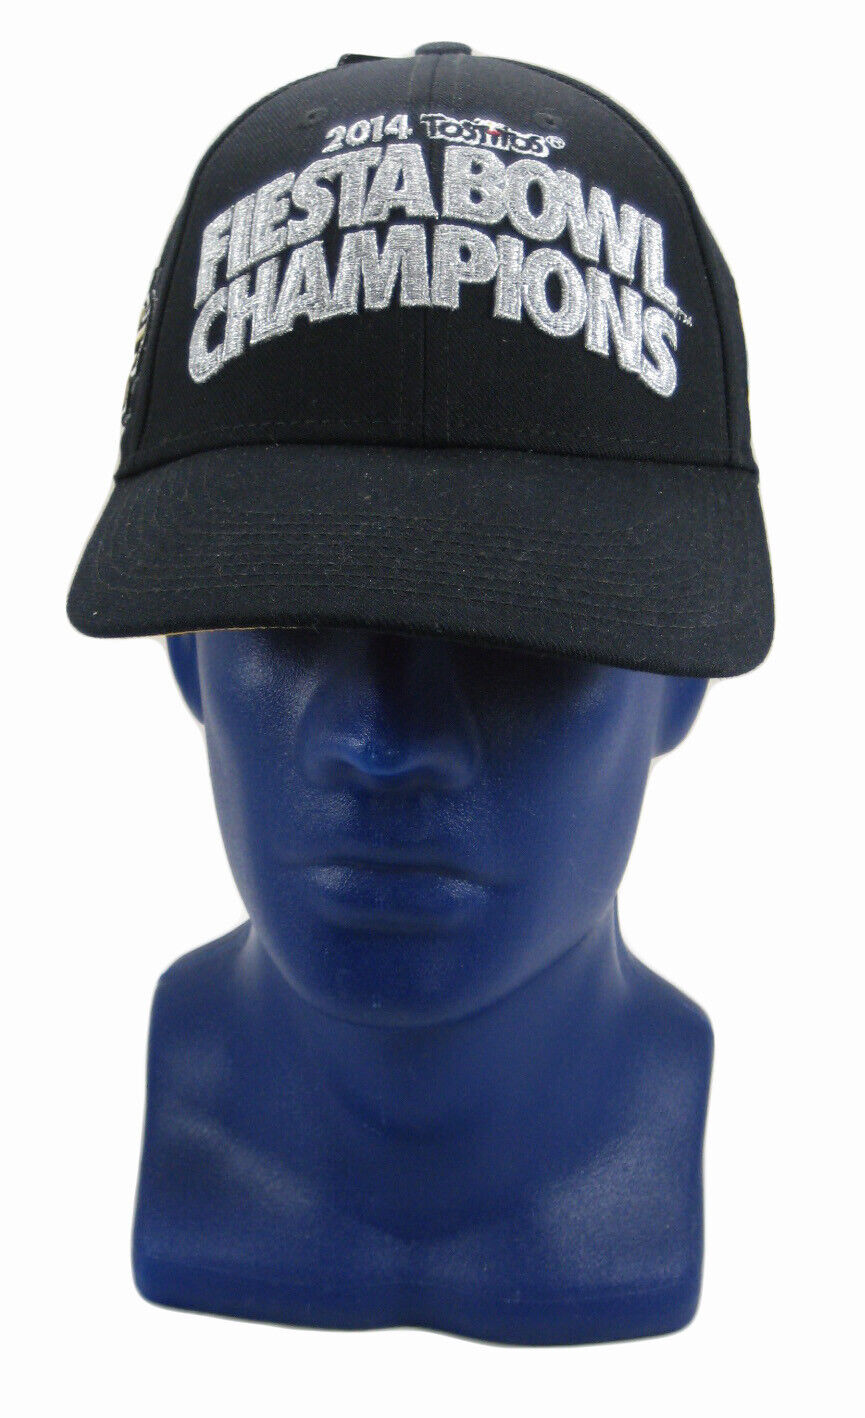 Smart UCF 2014 Fiesta Bowl Champions Locker Room Cap Hat nIKE 2014 Golden Knights on eBay